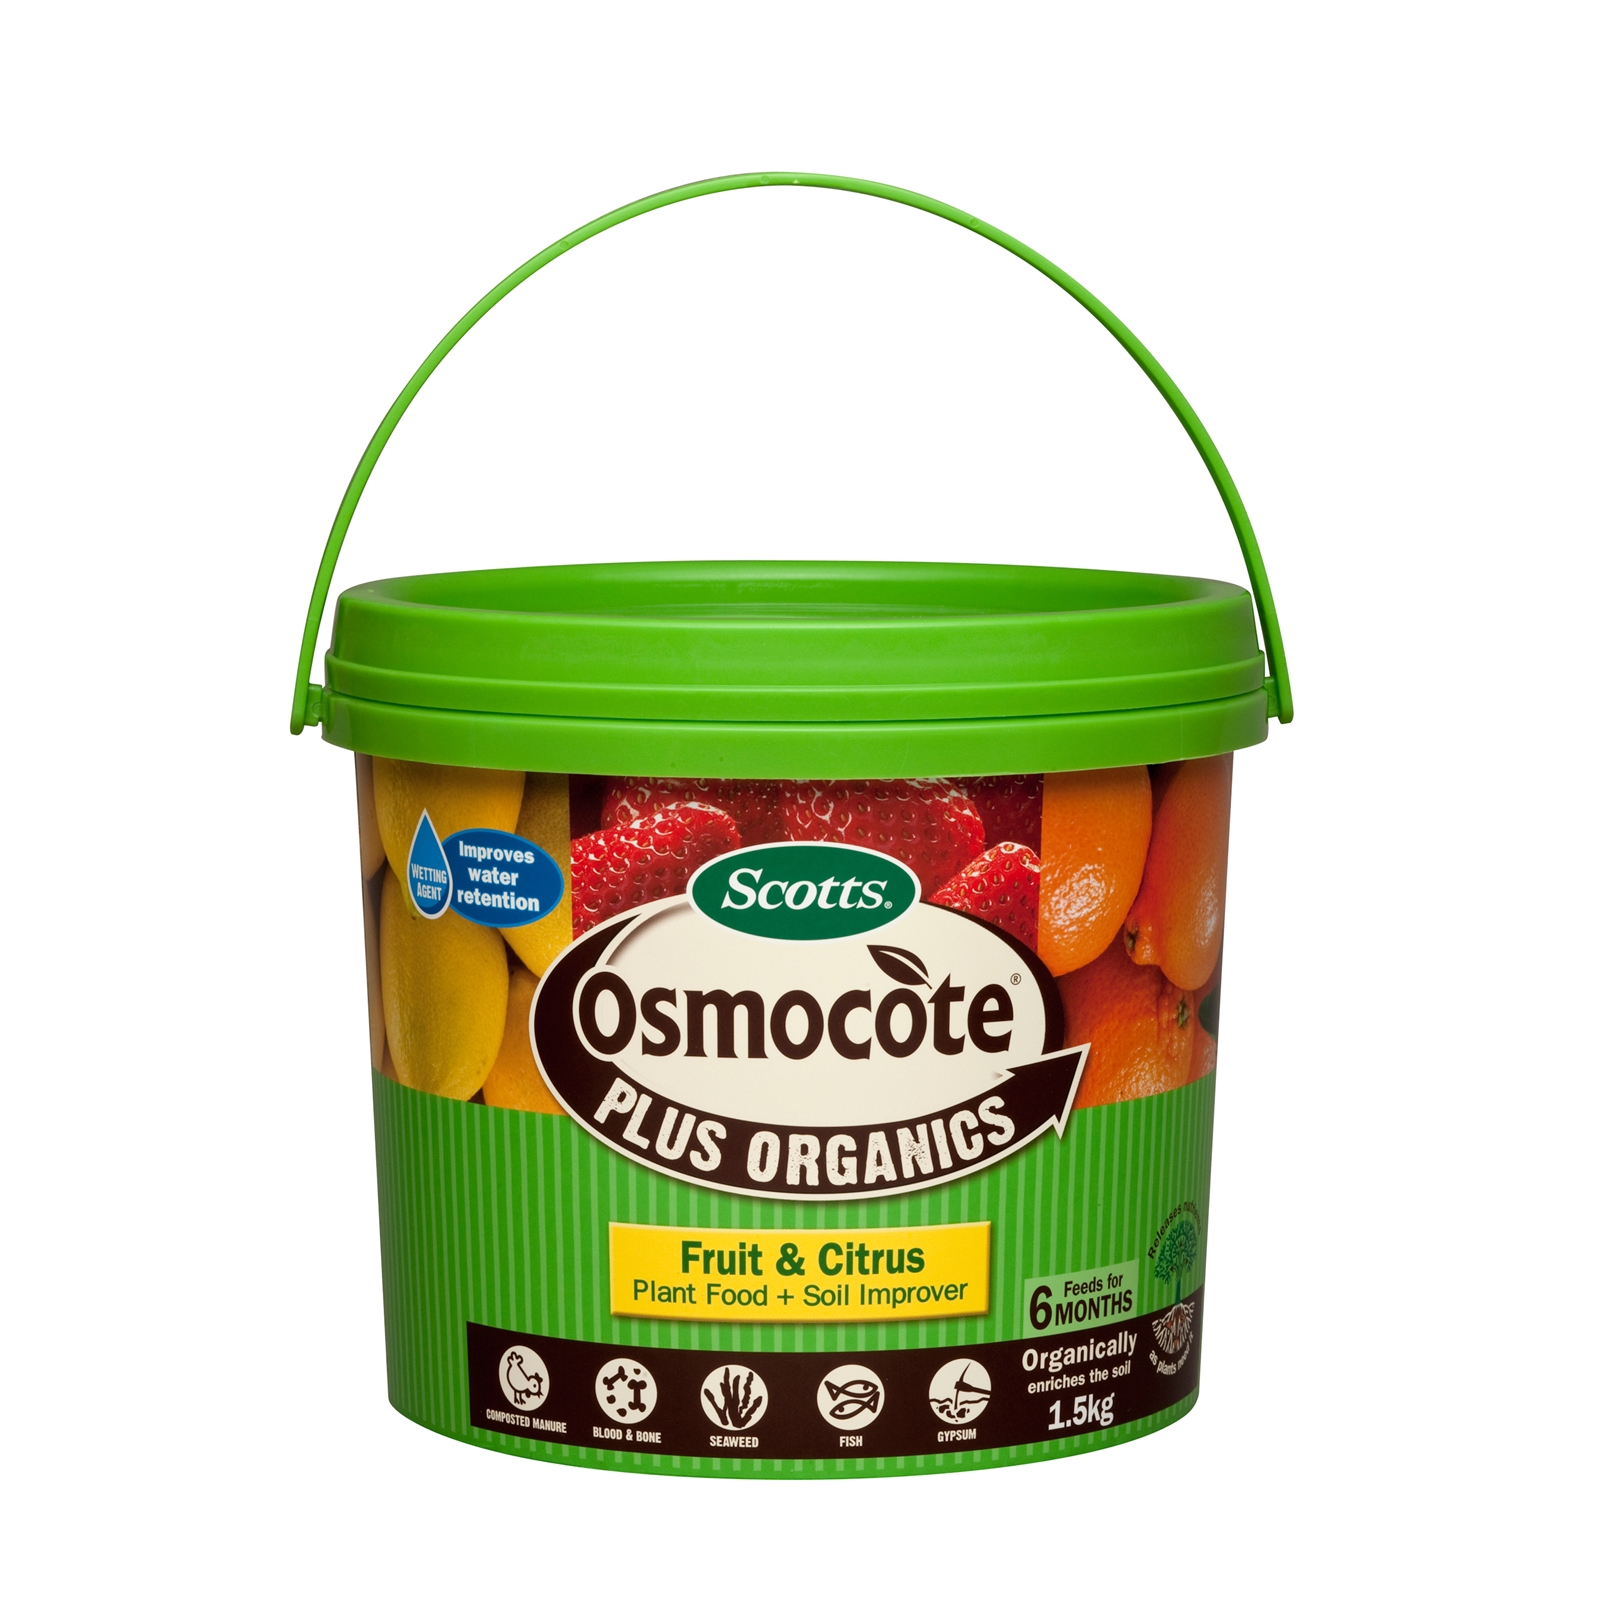 Osmocote Plus Organics 1.5kg Fruit & Citrus Fertiliser